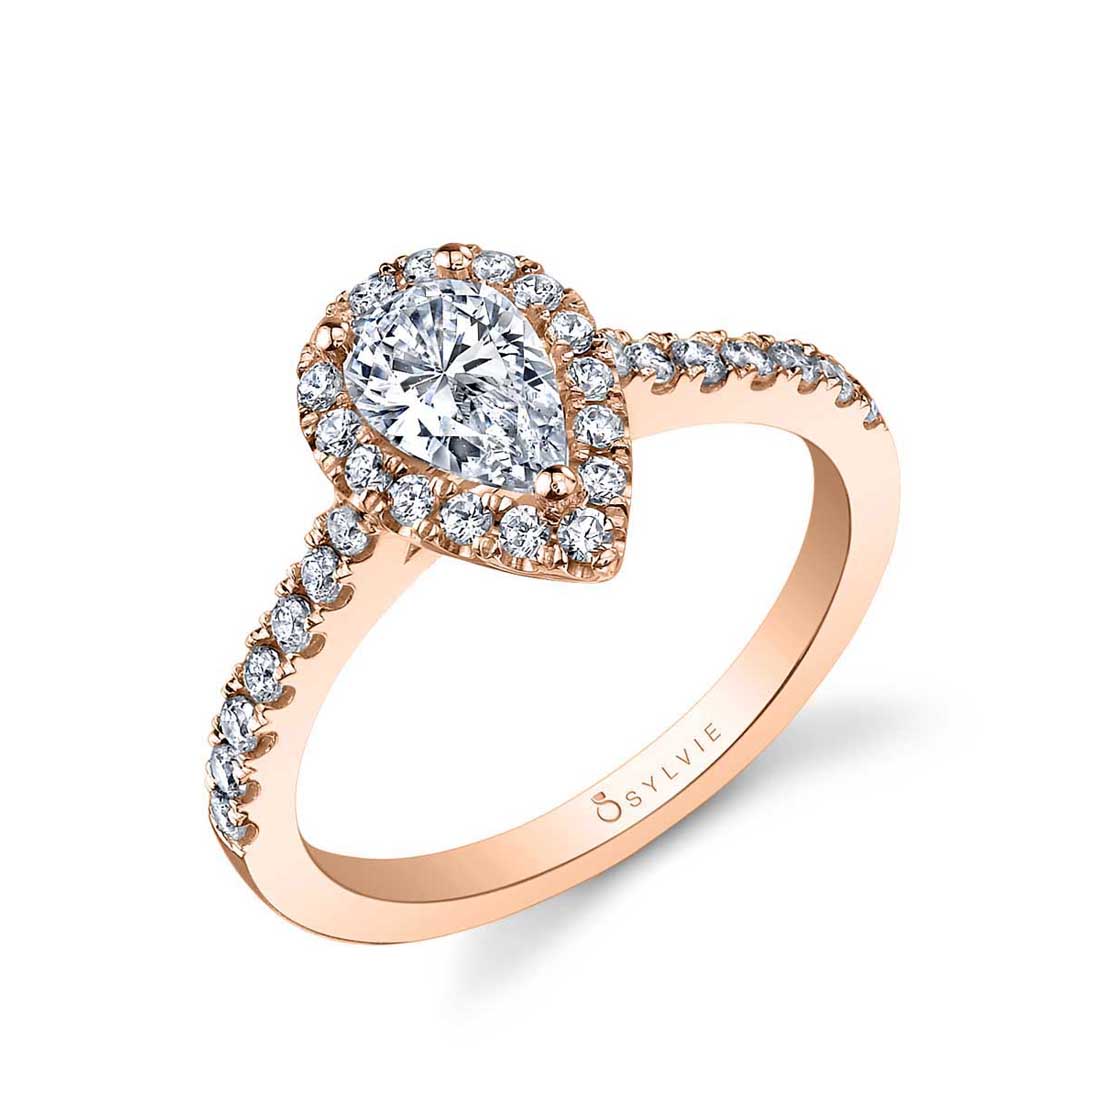 392463Chantelle-Pear-Shaped-Halo-Engagement-Ring.jpg.jpg